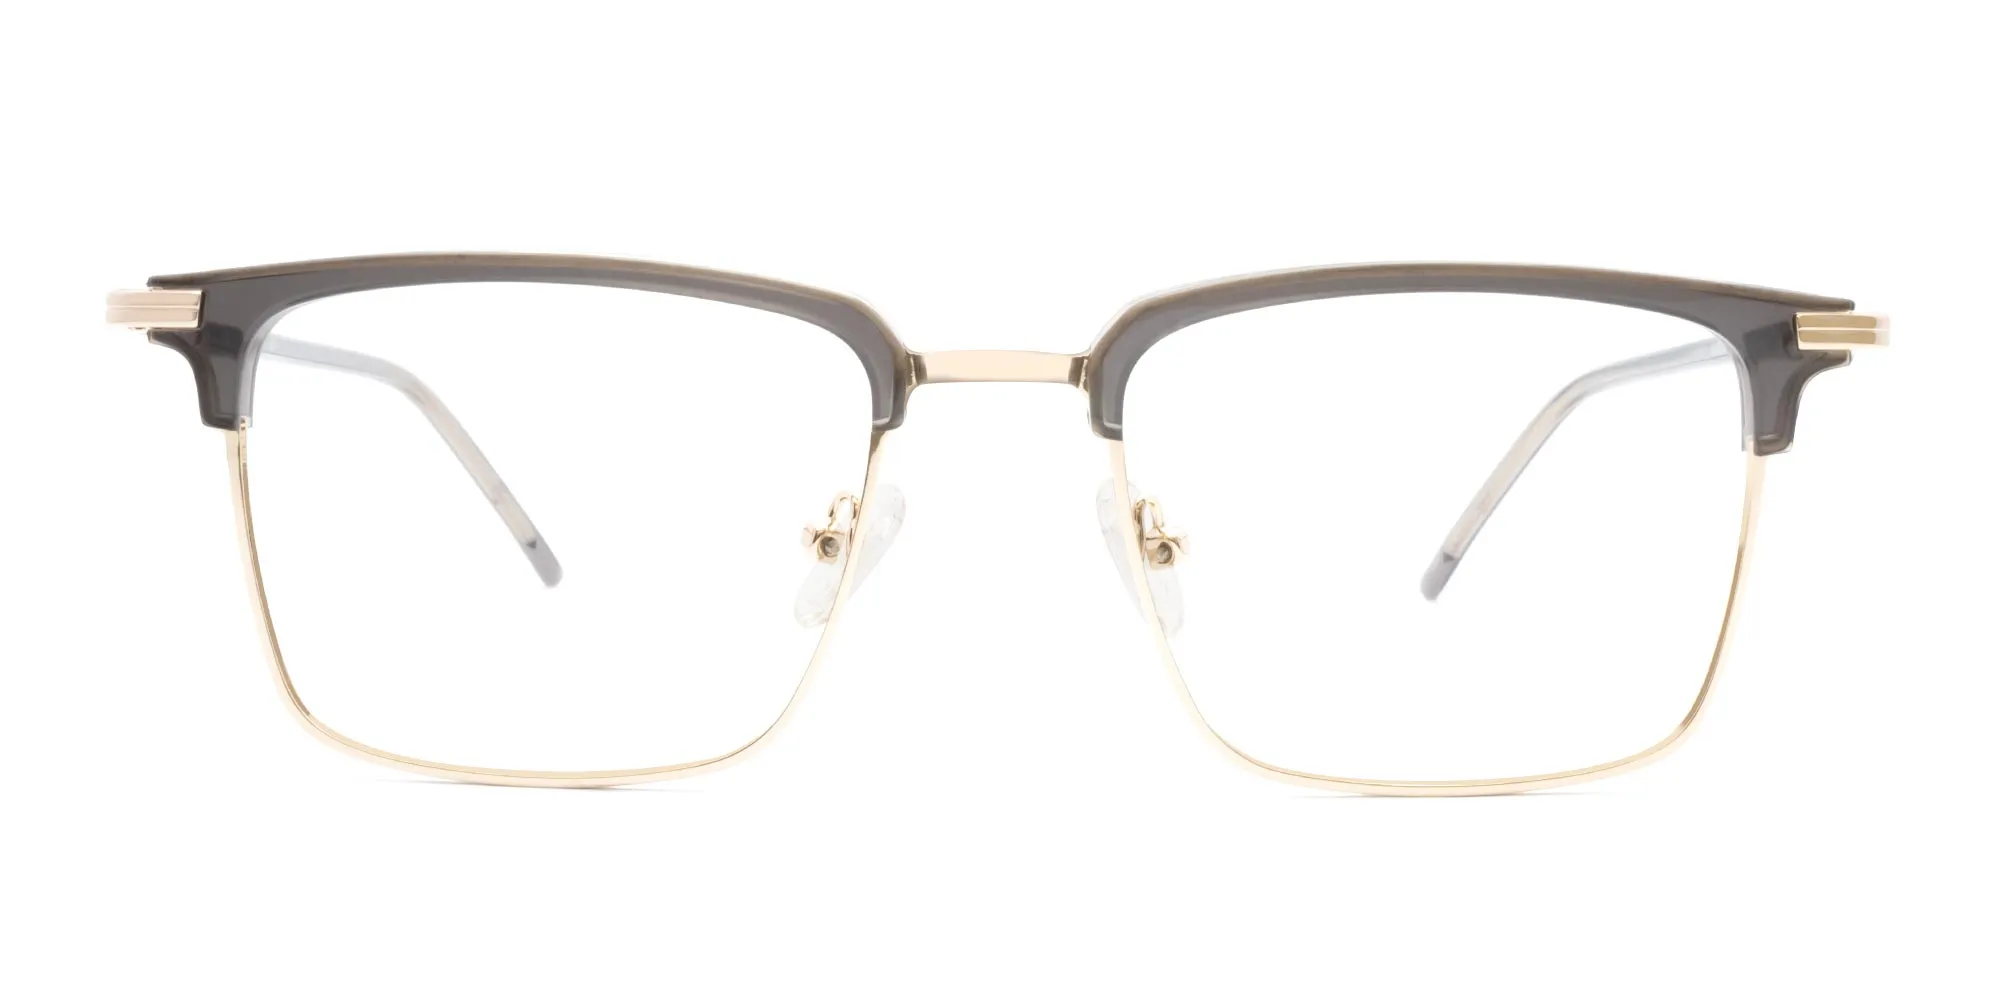 Designer Prescription Eyeglasses-2